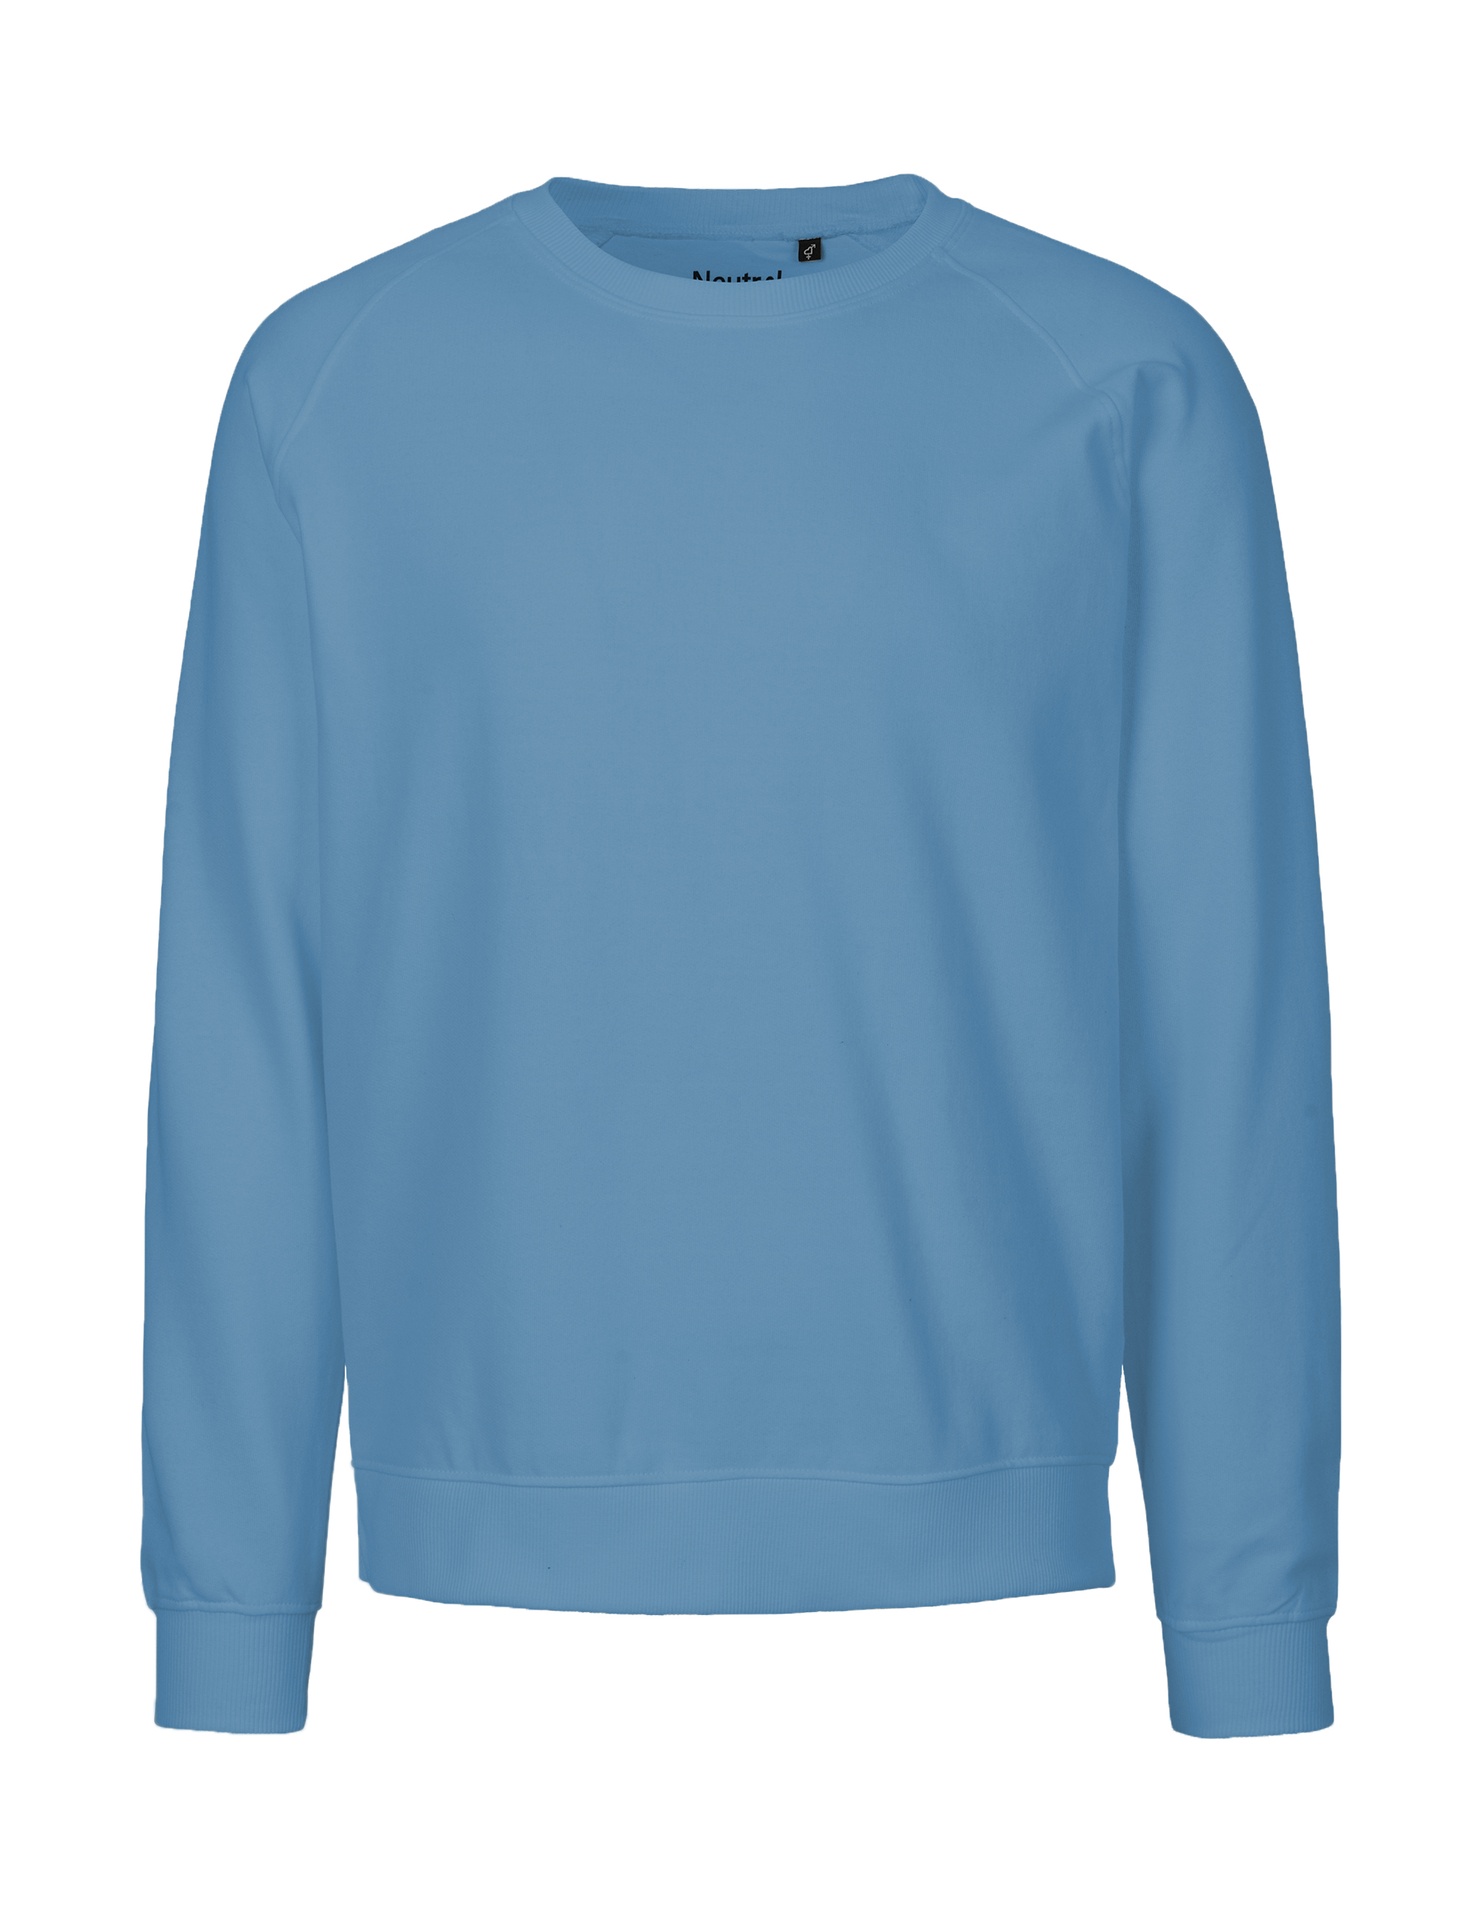 [PR/02835] Unisex Sweatshirt (Dusty Indigo 41, L)